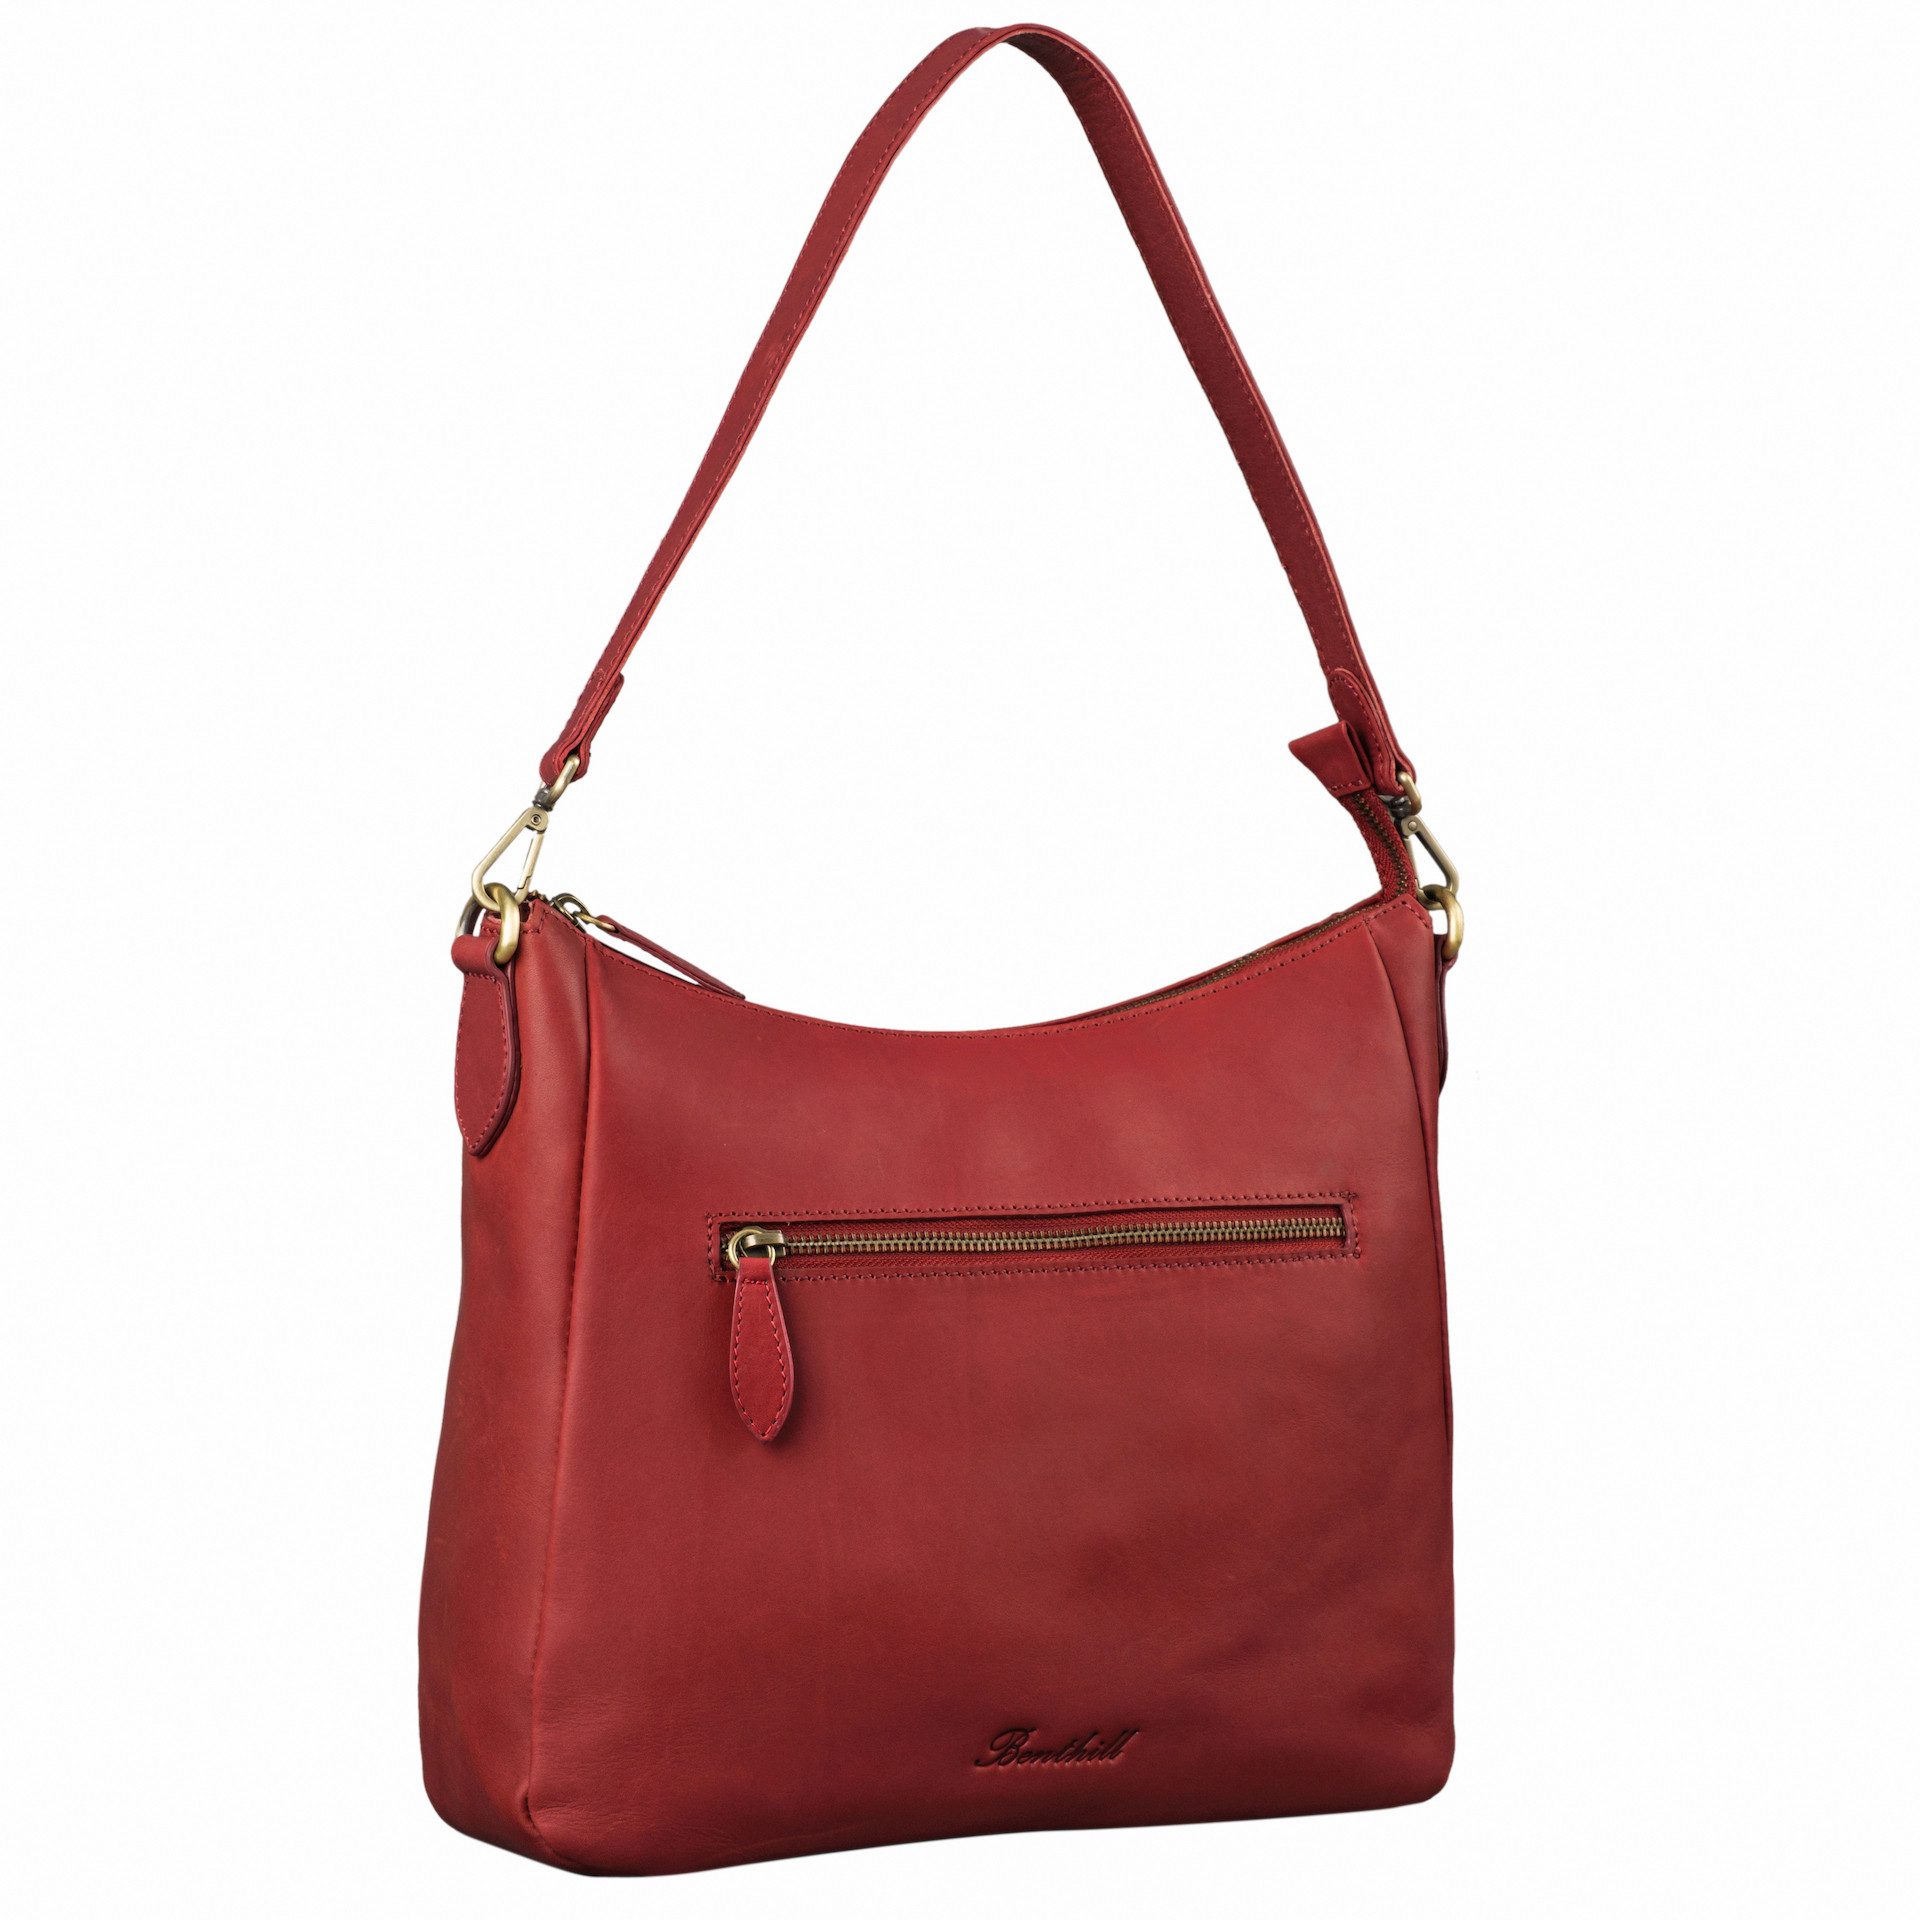 Benthill Handtasche Damen Echt Leder Umhängetasche Schultertasche Ledertasche Vintage Bag, Reißverschlussfach